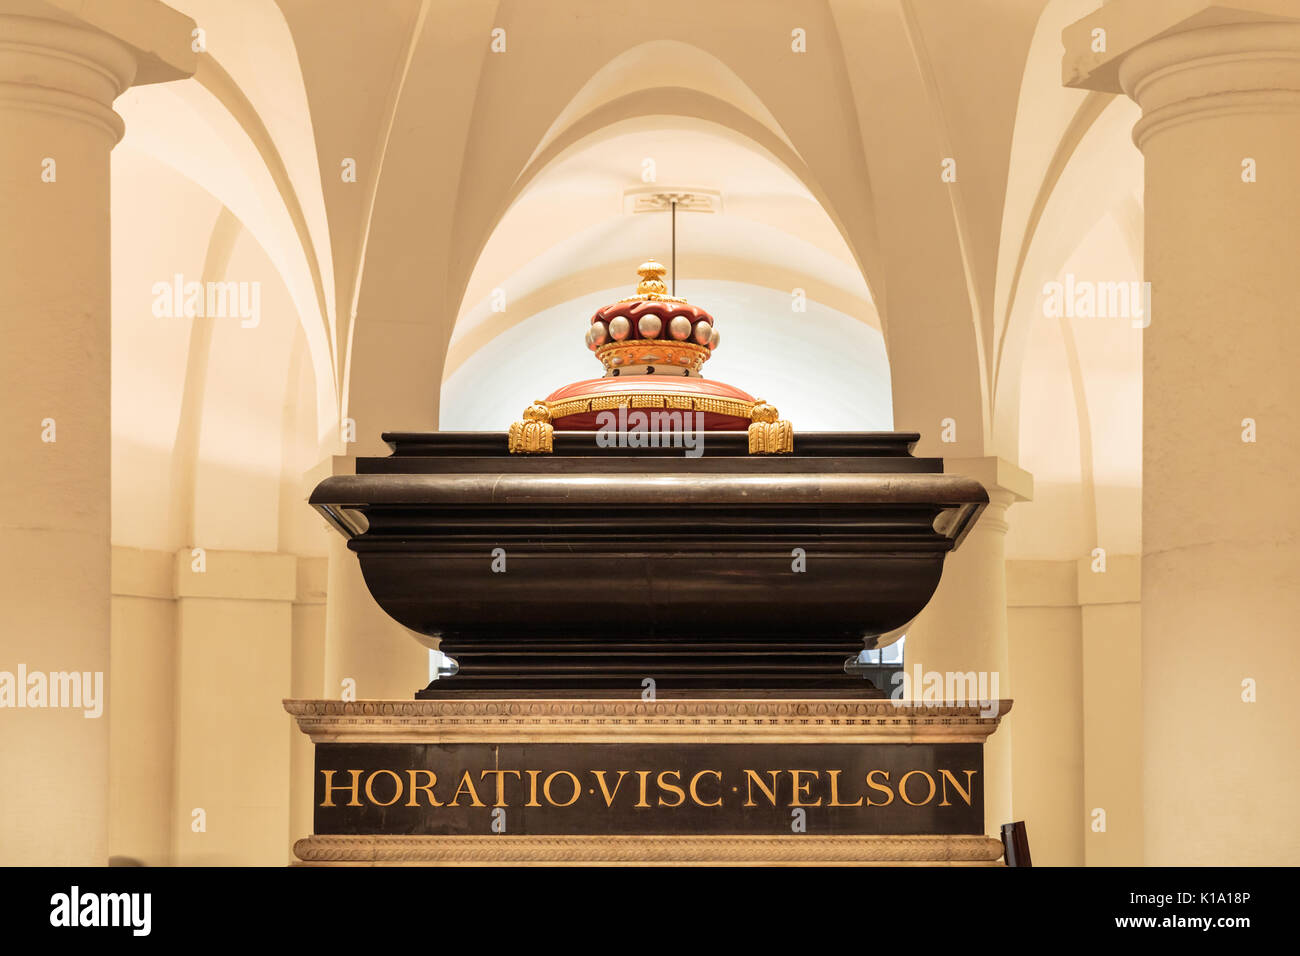 Lord Nelson's Tomb, schwarzer Marmor Sarkophag mit Sarg von Admiral Lord Nelson, Horatio Viscount Nelson, Krypta der St. Paul's Cathedral, London UK Stockfoto